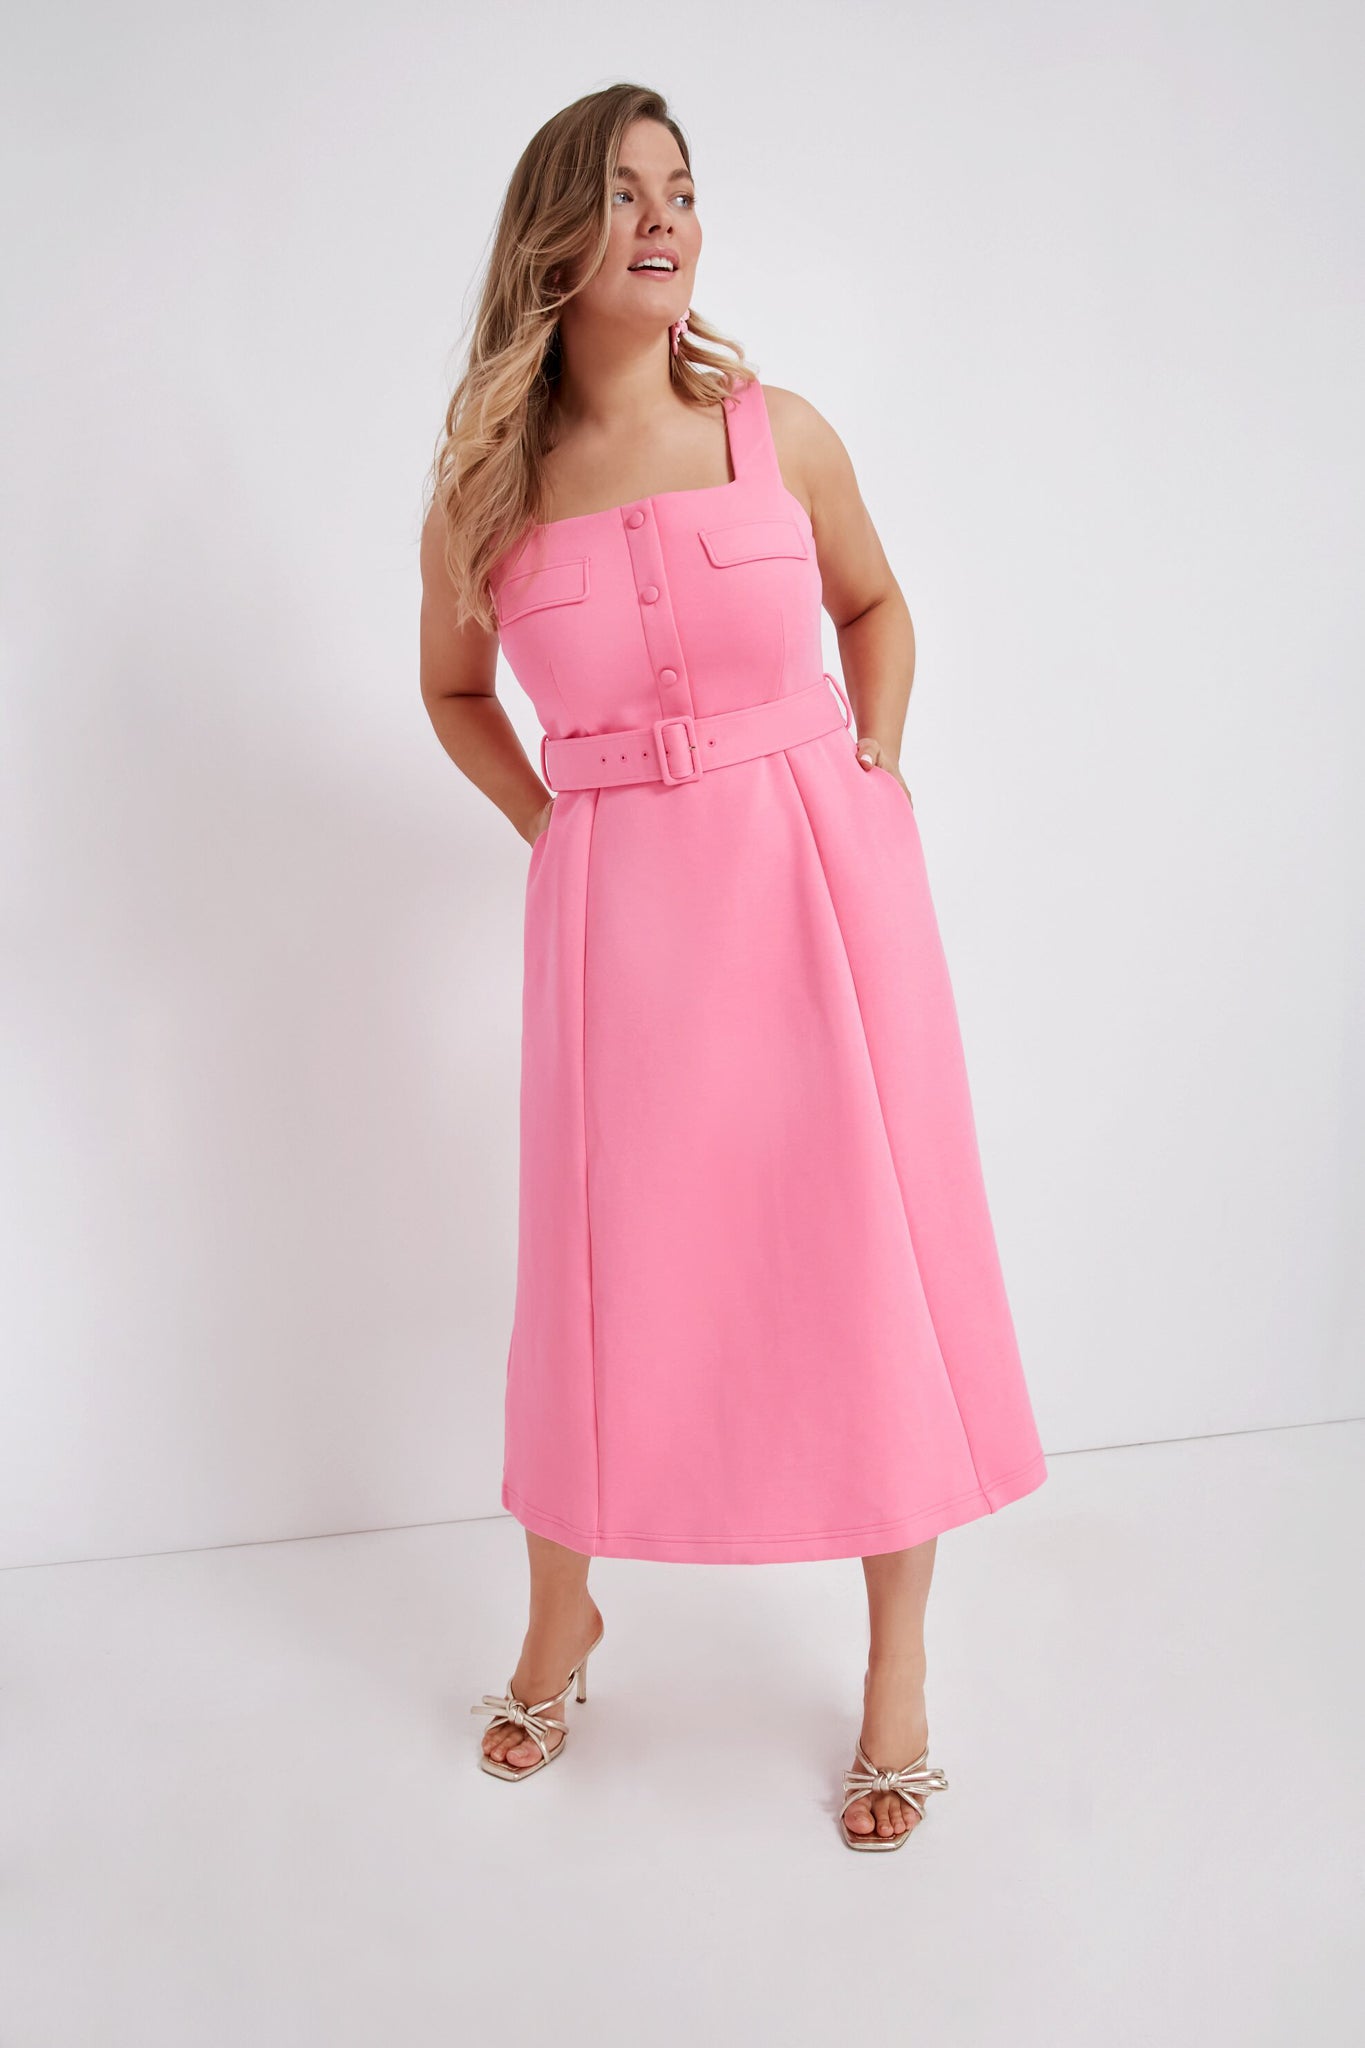 Peony Pink Neoprene Elle Dress | Tuckernuck x Atlantic-Pacific